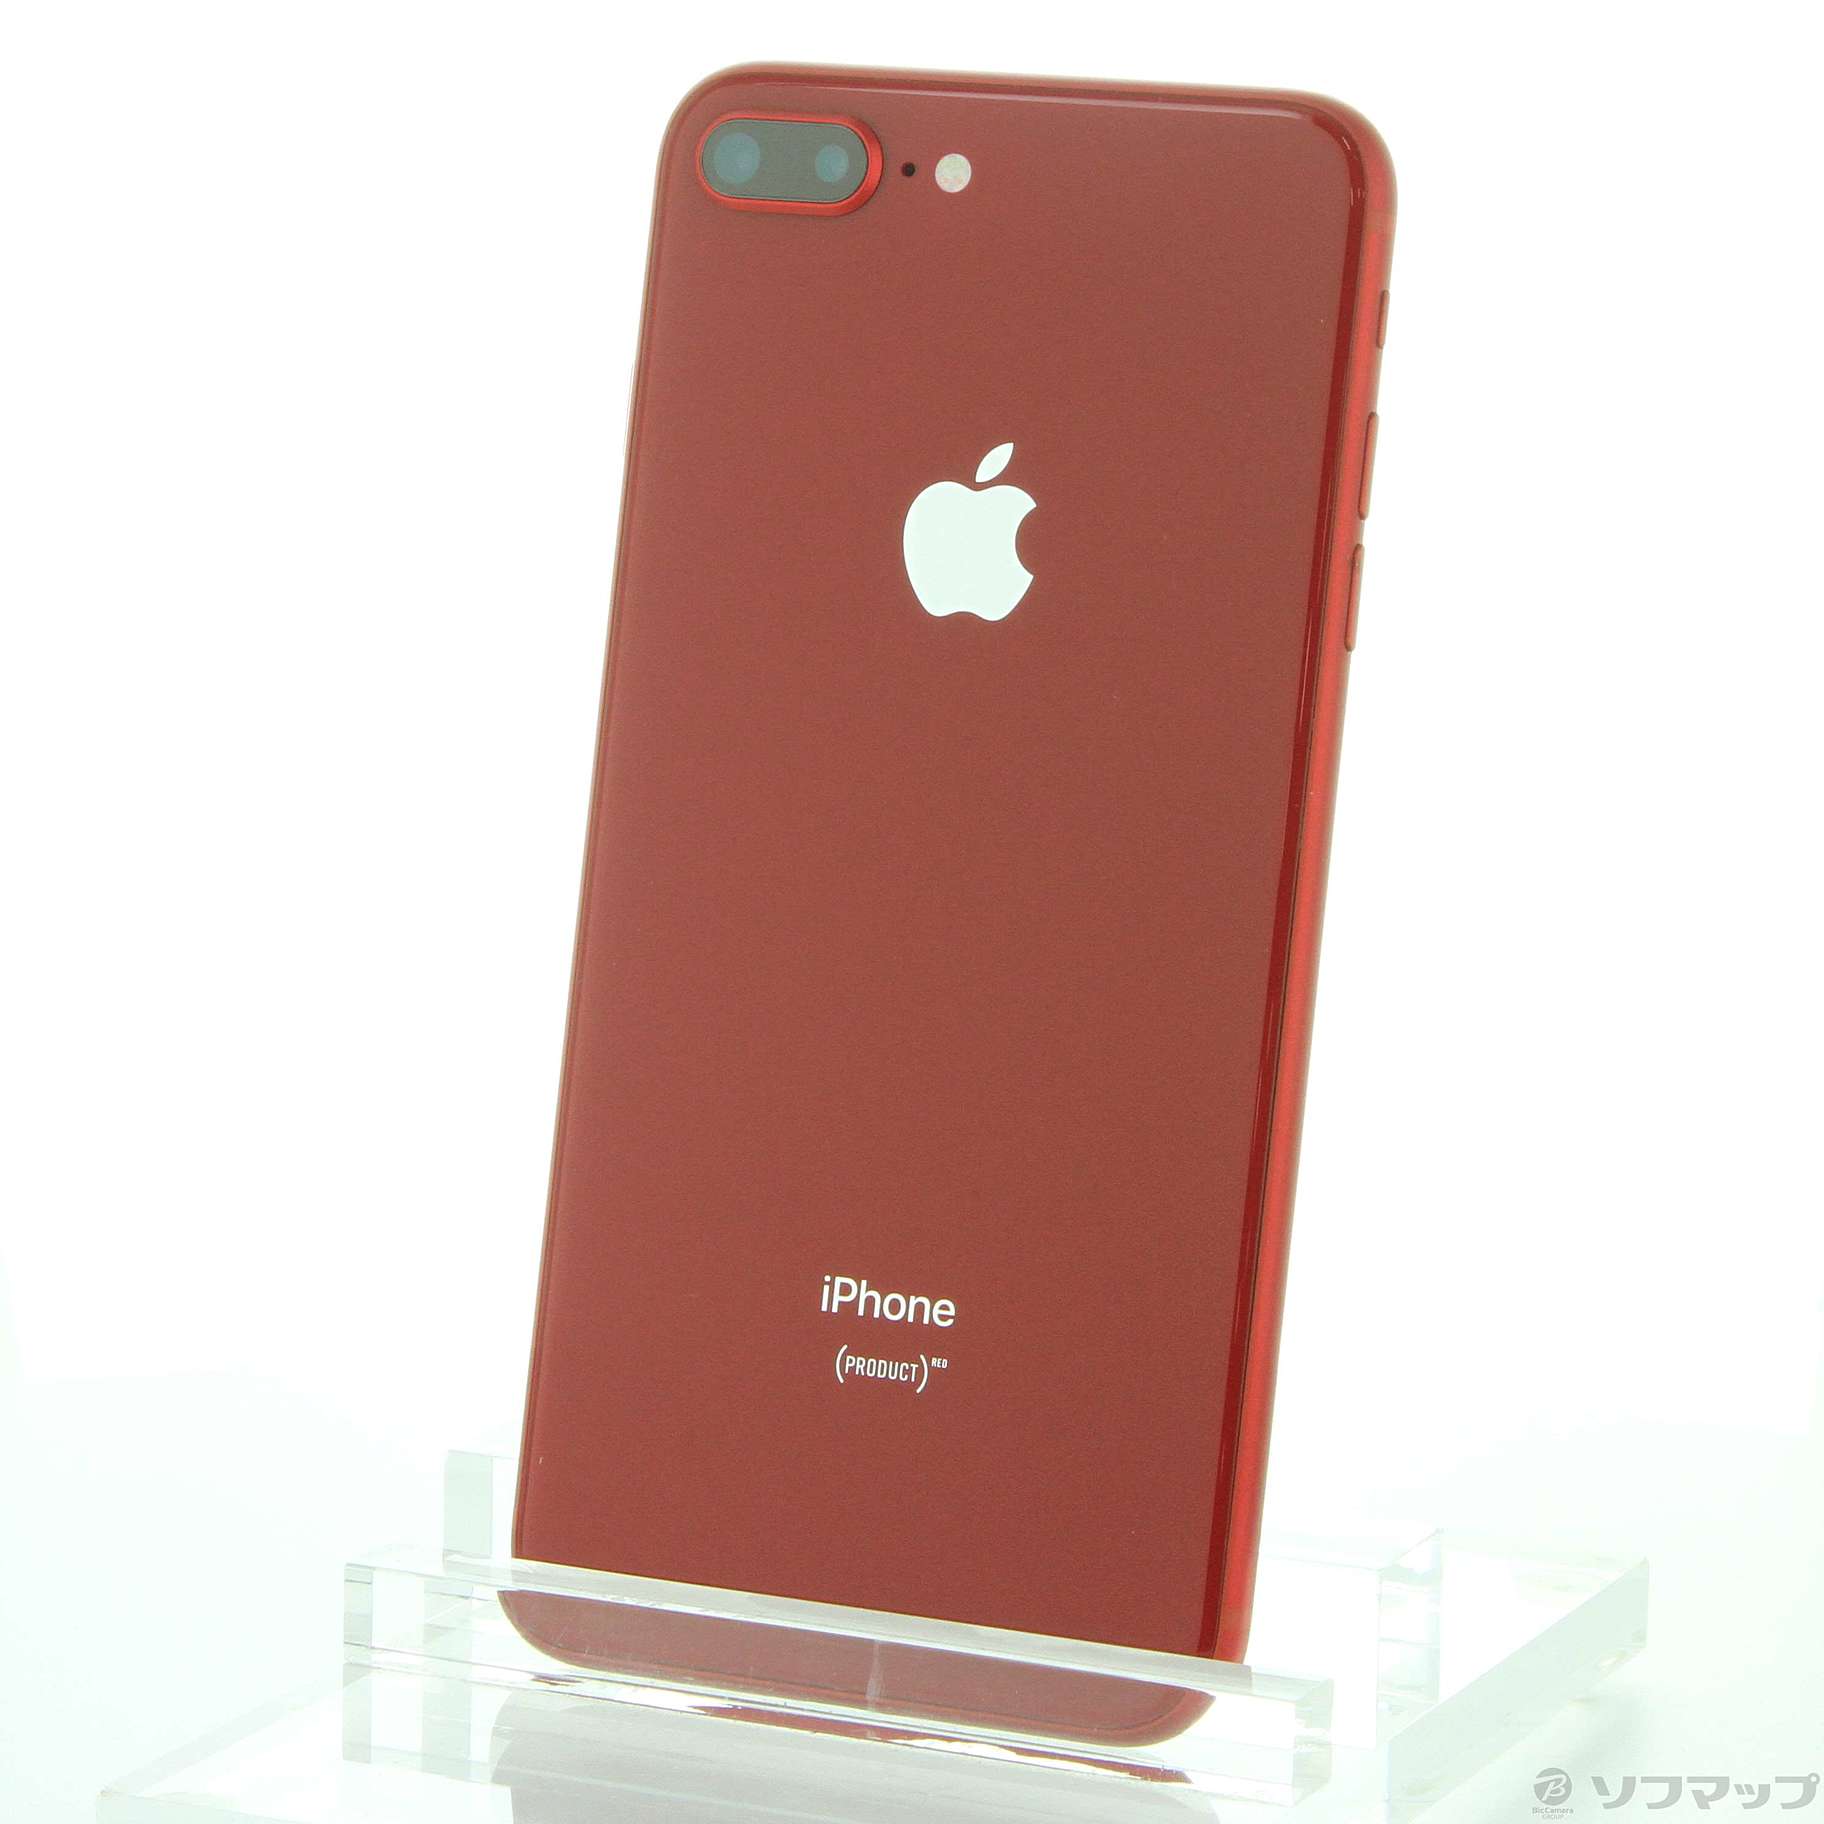 iPhone 8 Plus 256GB PRODUCT RED SIMフリー256GB